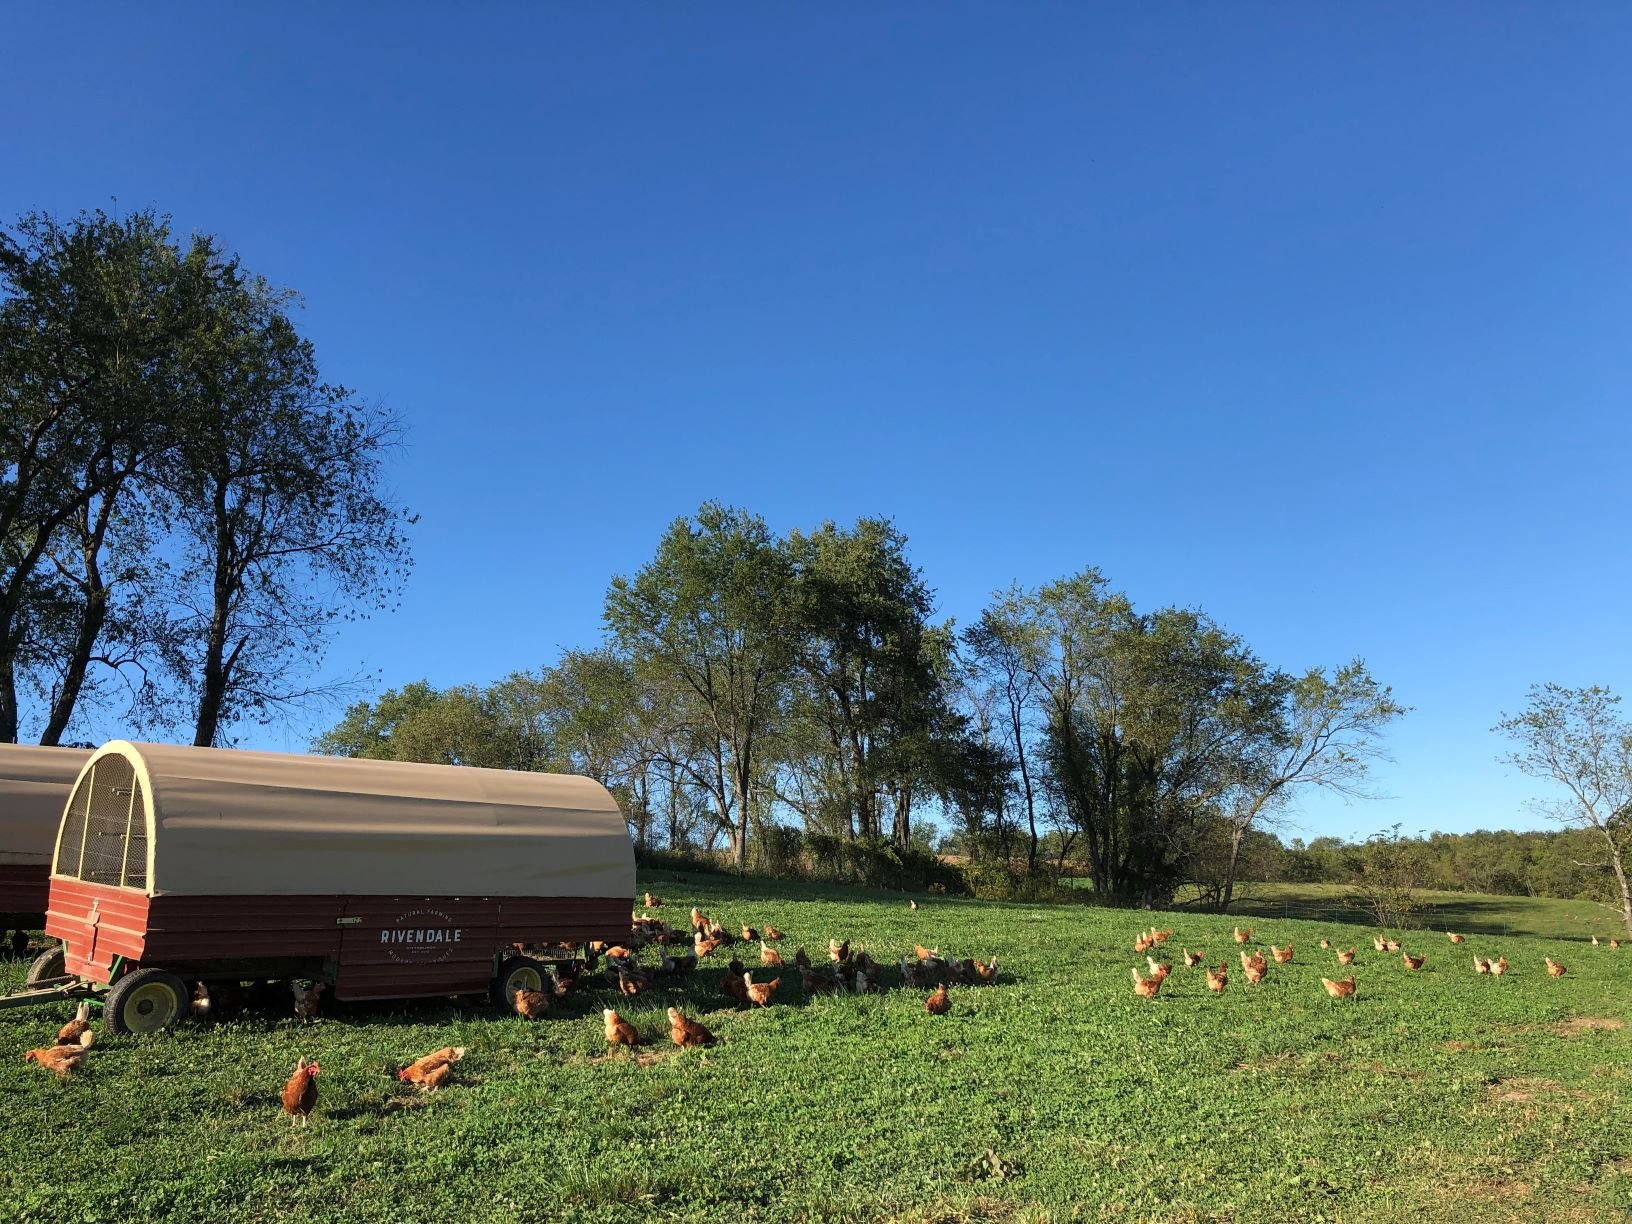 Previous Happening: Farm Happenings for September 24, 2019 (week 16)